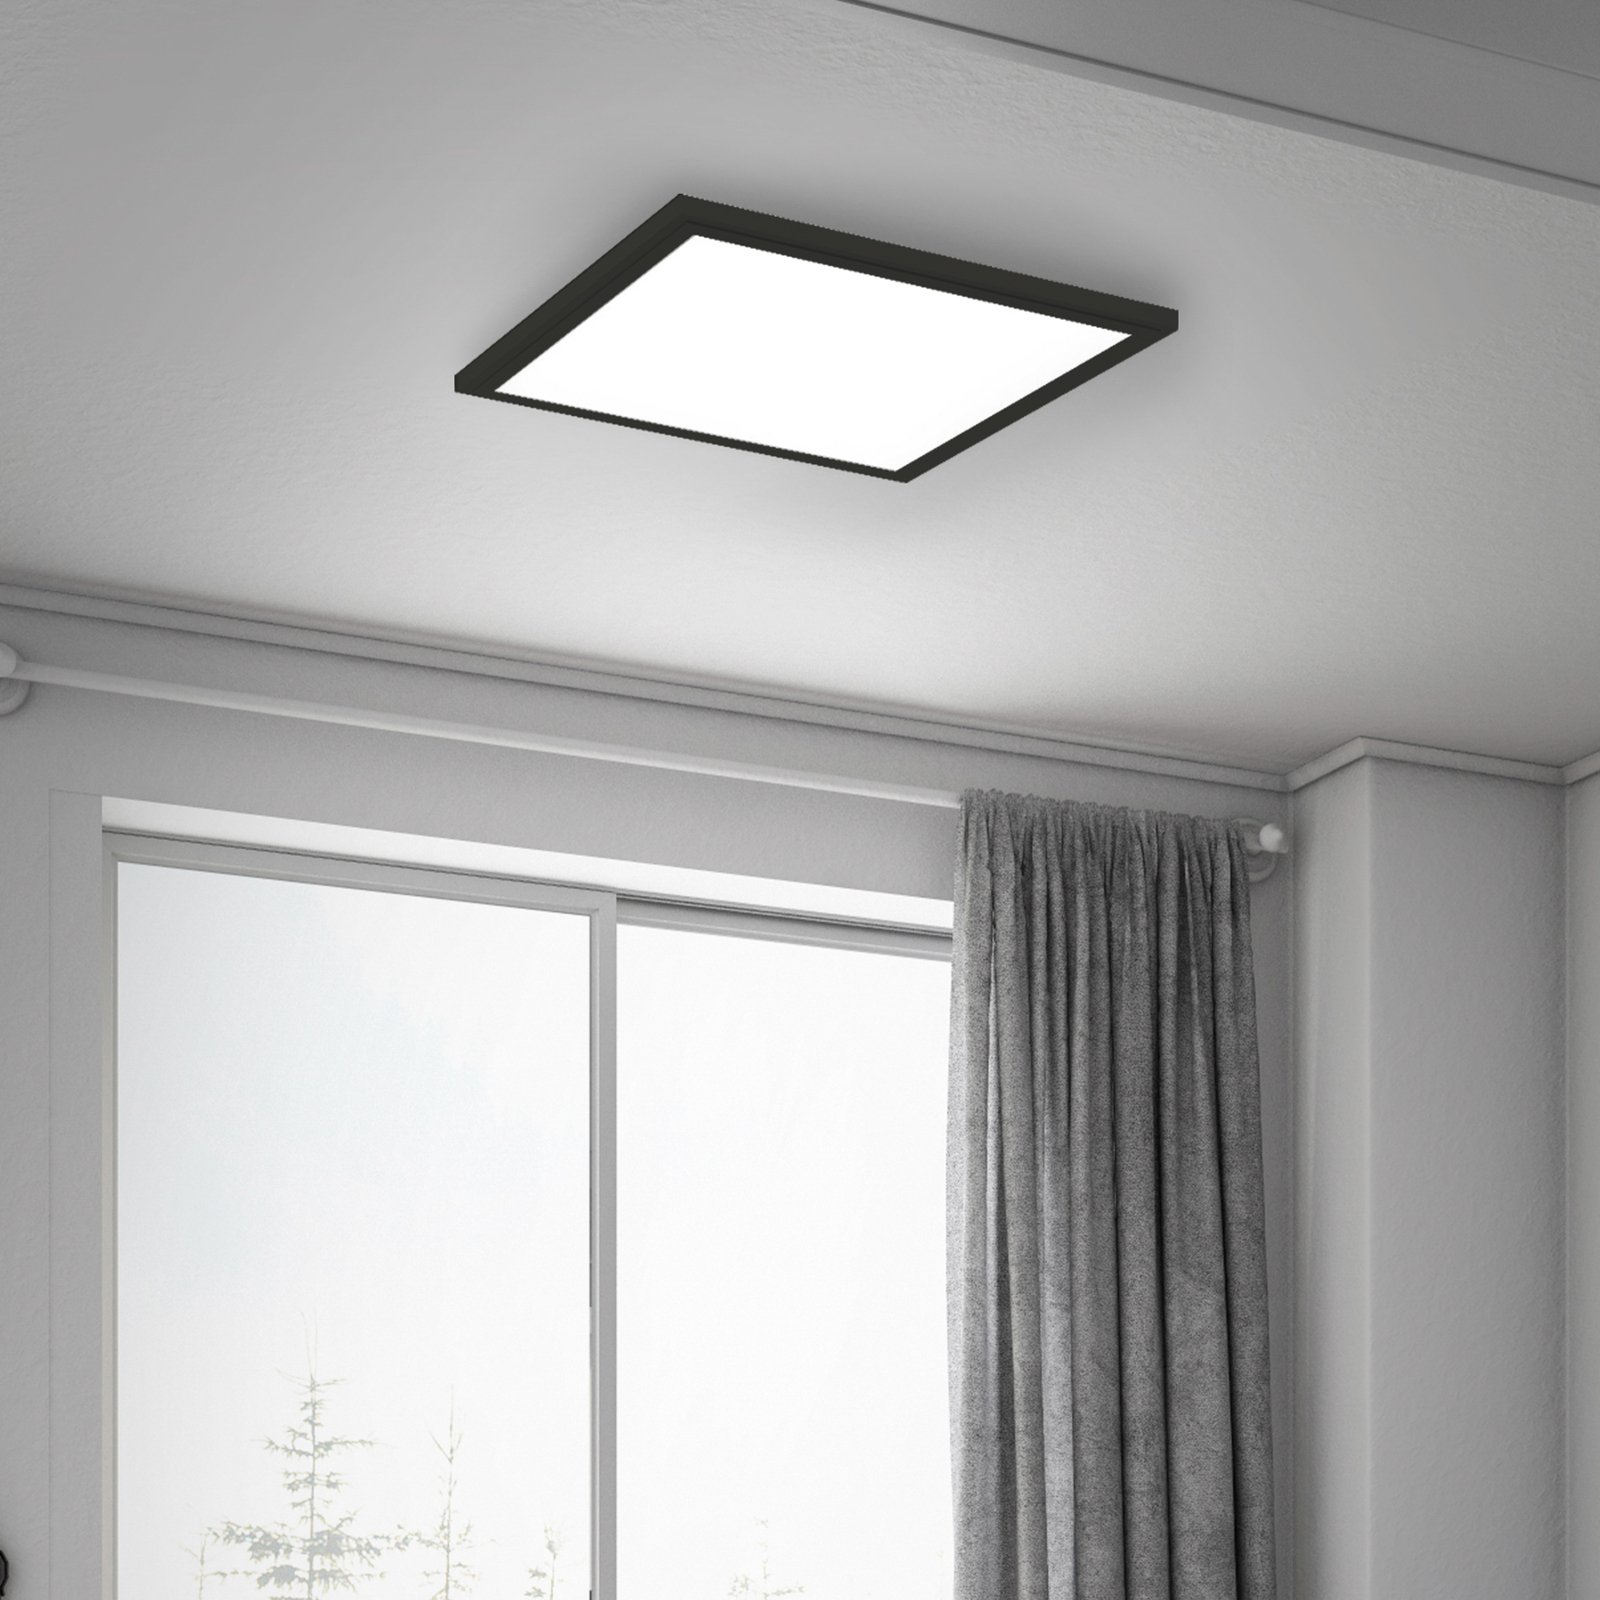 Simple LED panel, black, ultra-flat, 30 x 30 cm